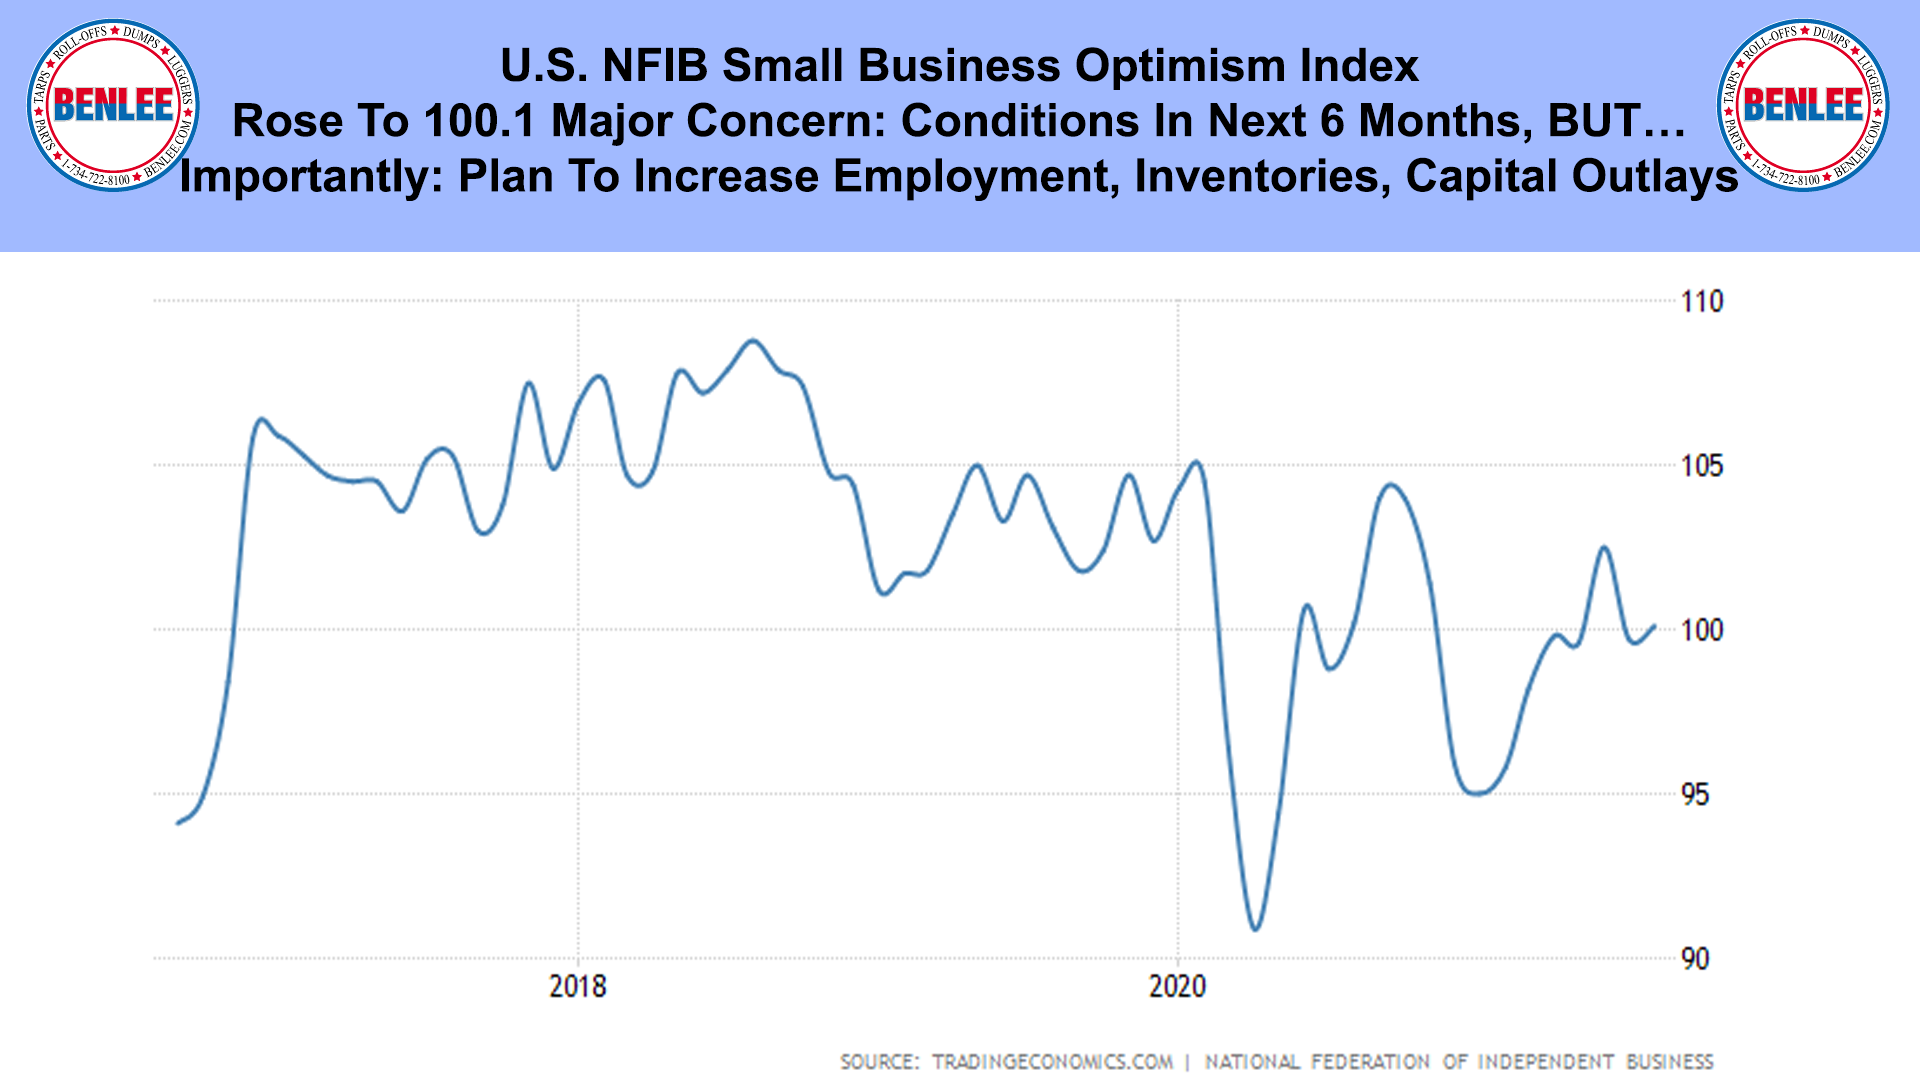 U.S. NFIB Small Business Optimism Index